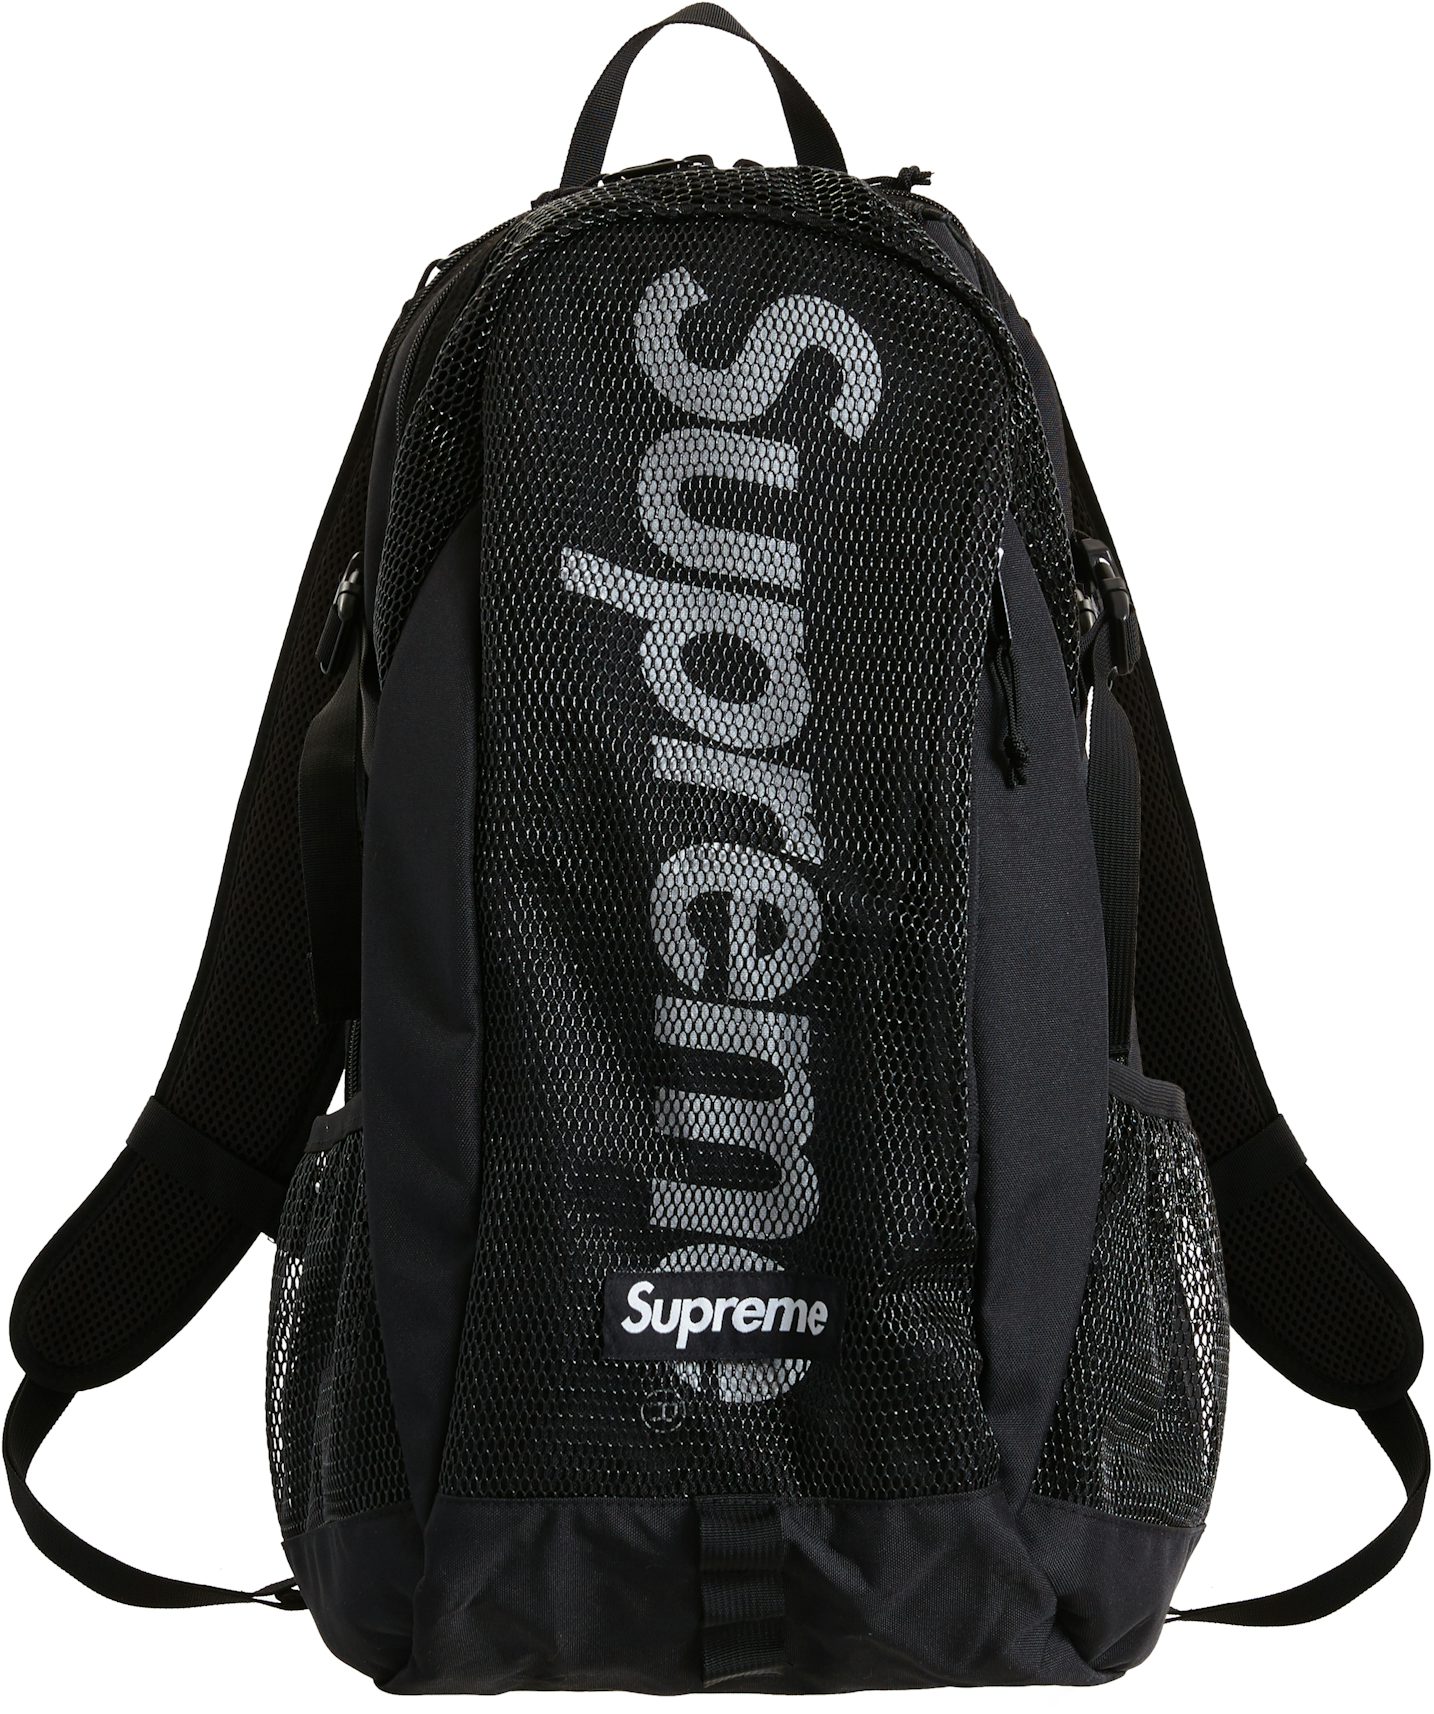 louis vuitton supreme backpacks